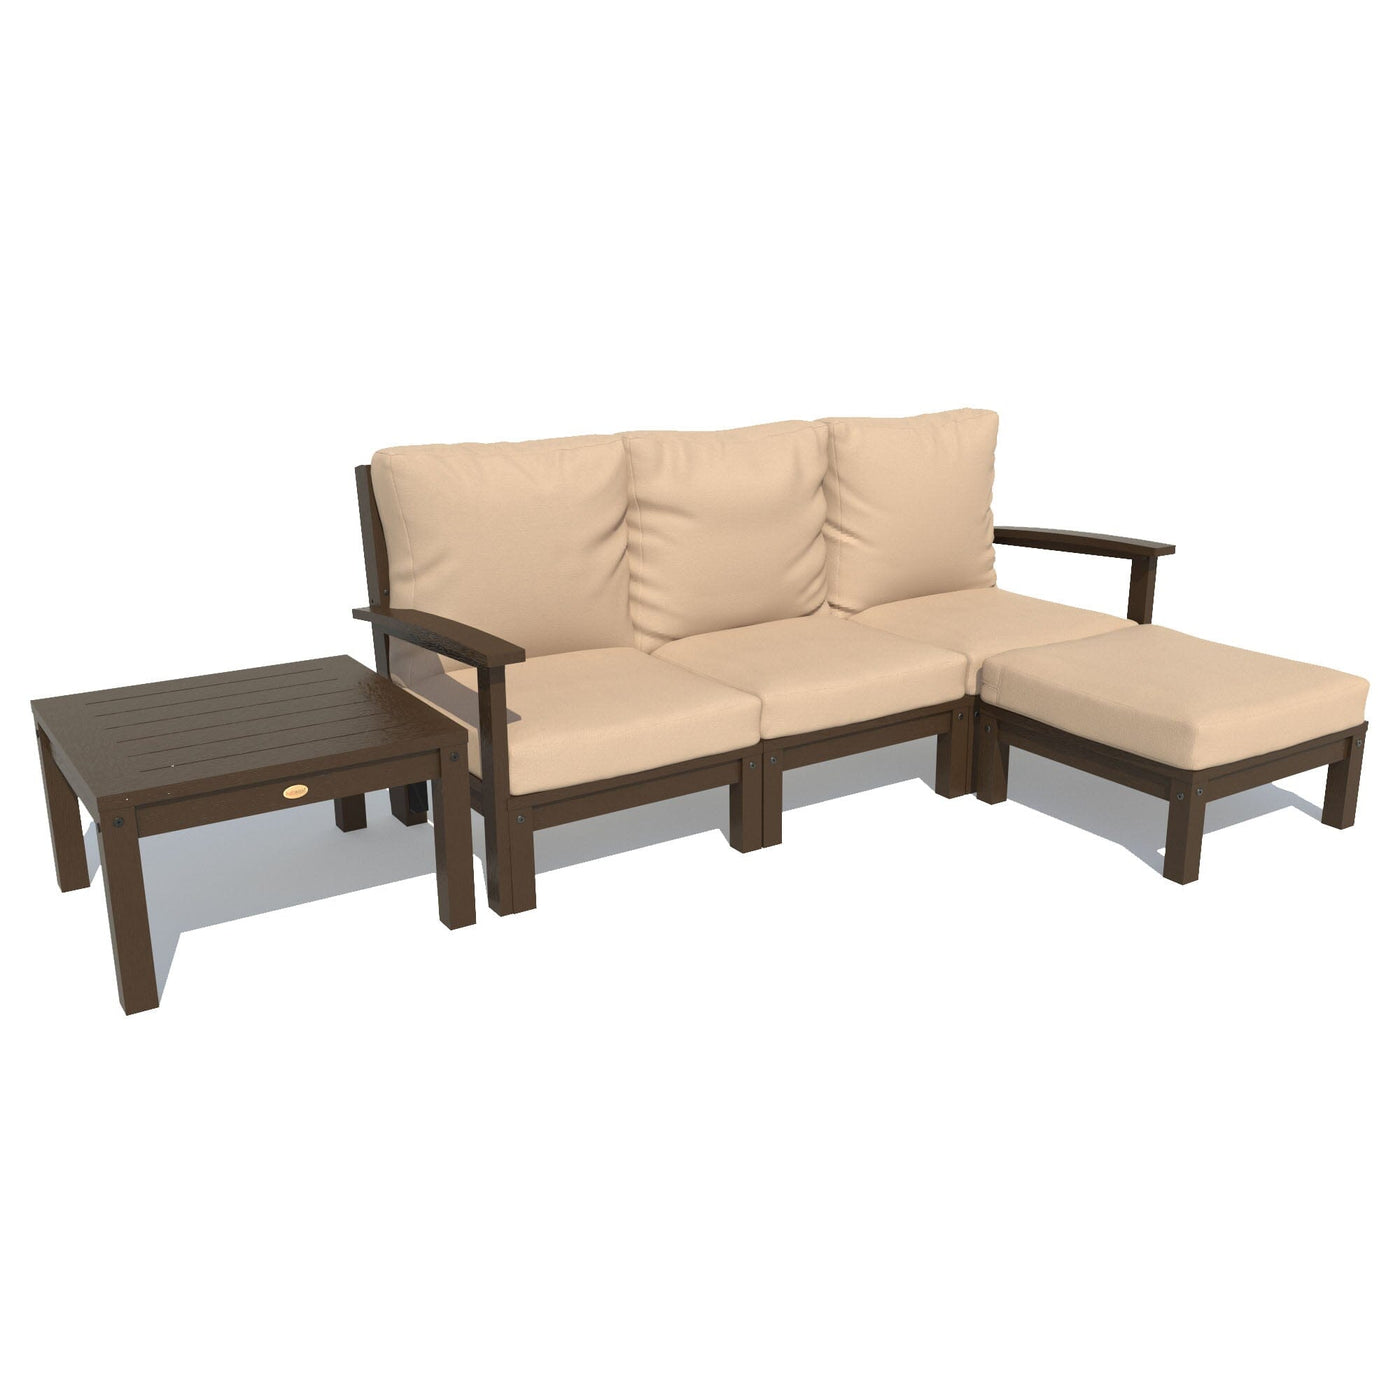 Bespoke Deep Seating: Sofa, Ottoman, and Side Table Deep Seating Highwood USA Driftwood Weathered Acorn 